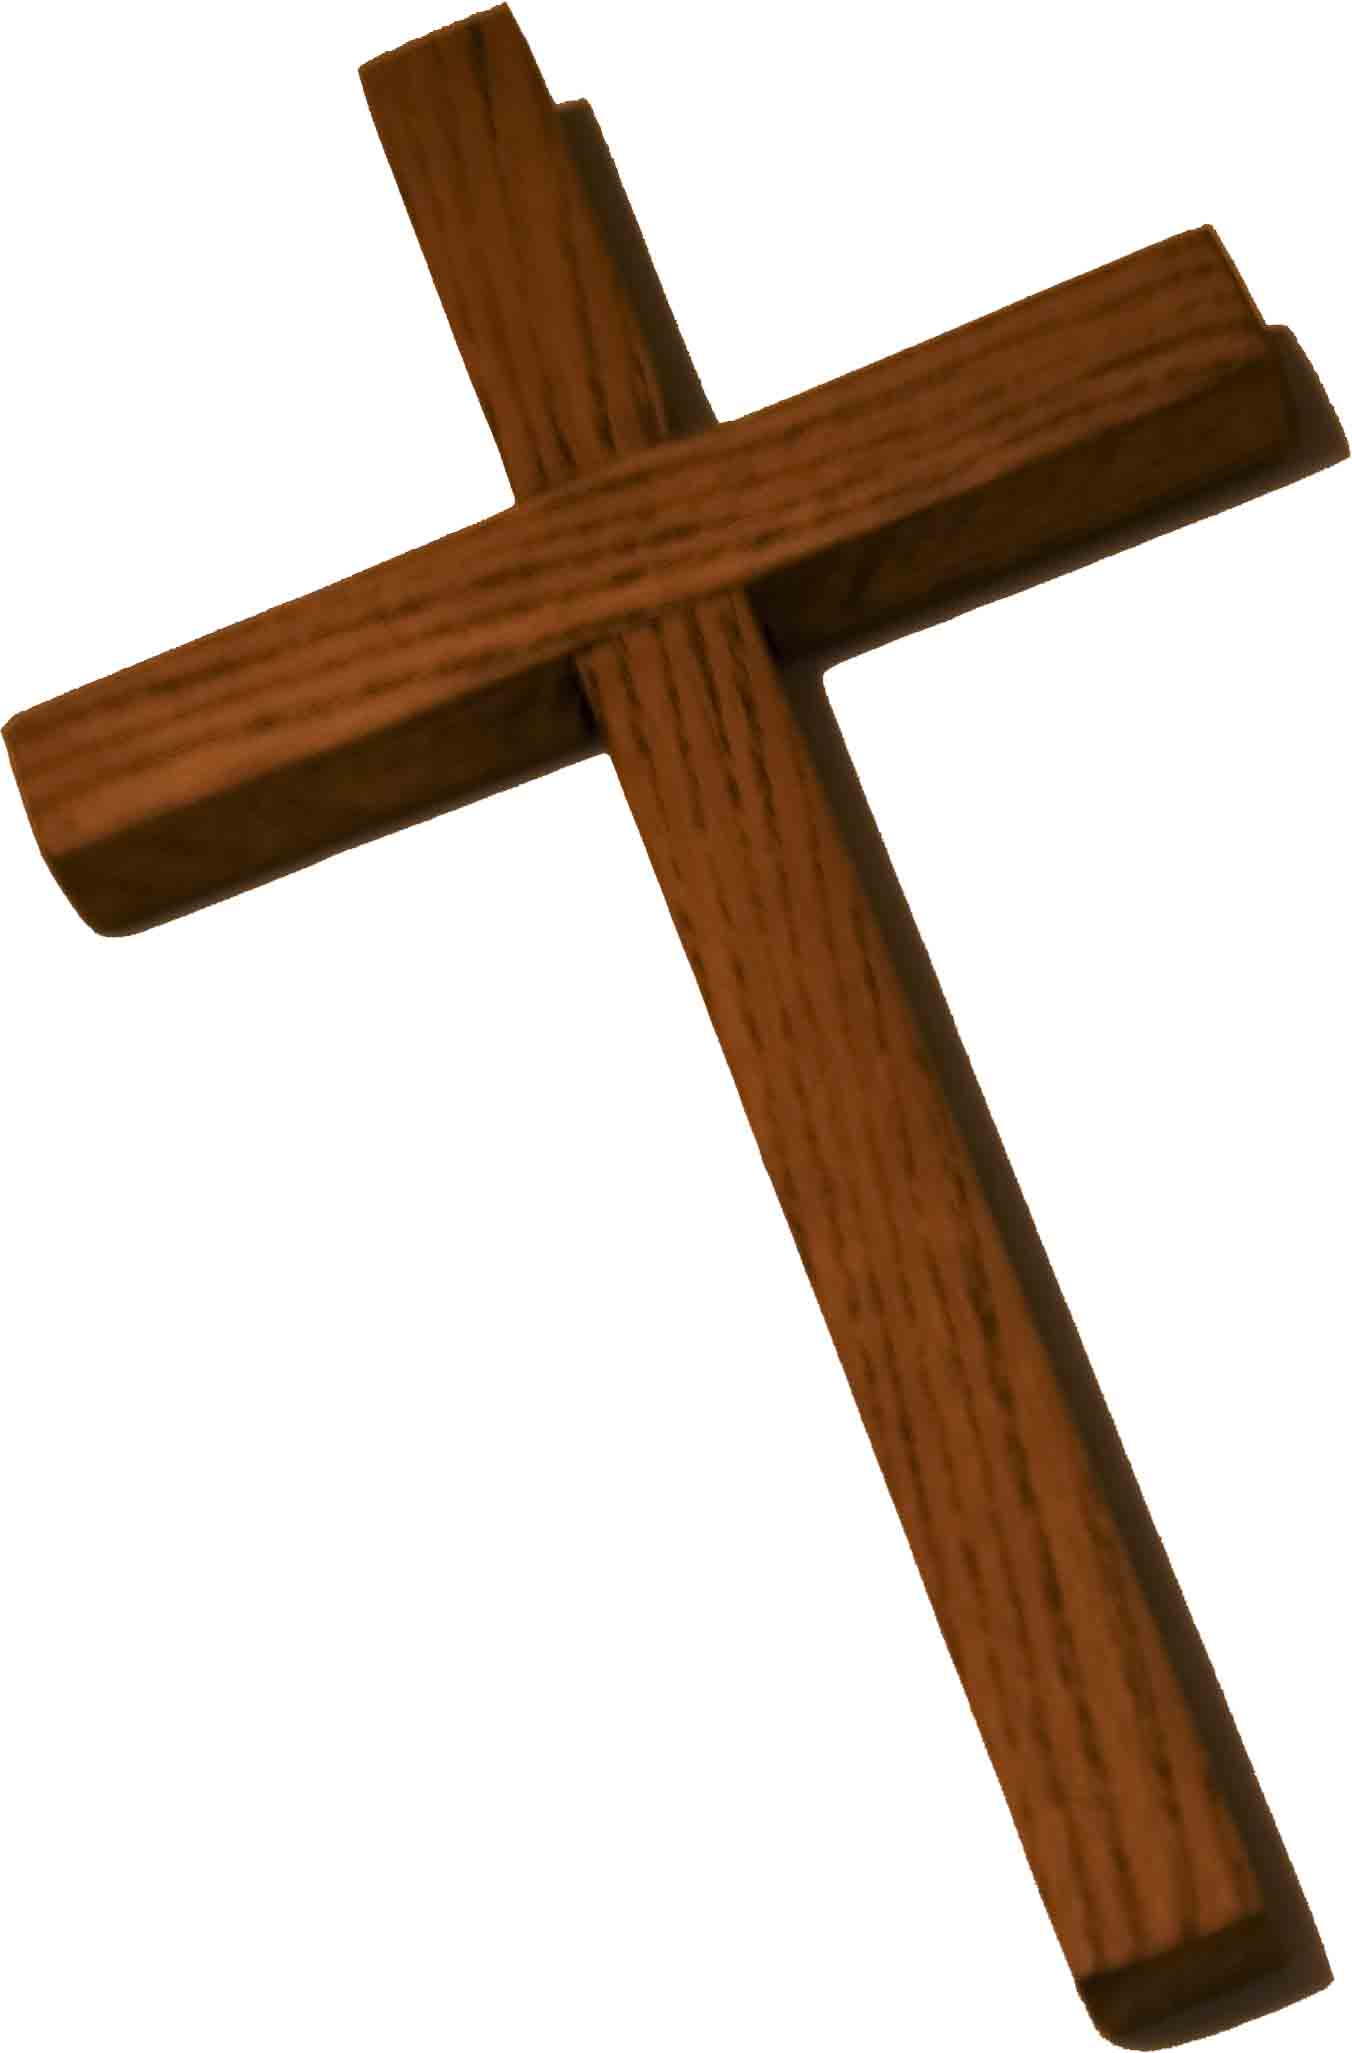 Wooden cross clipart 3 - WikiClipArt